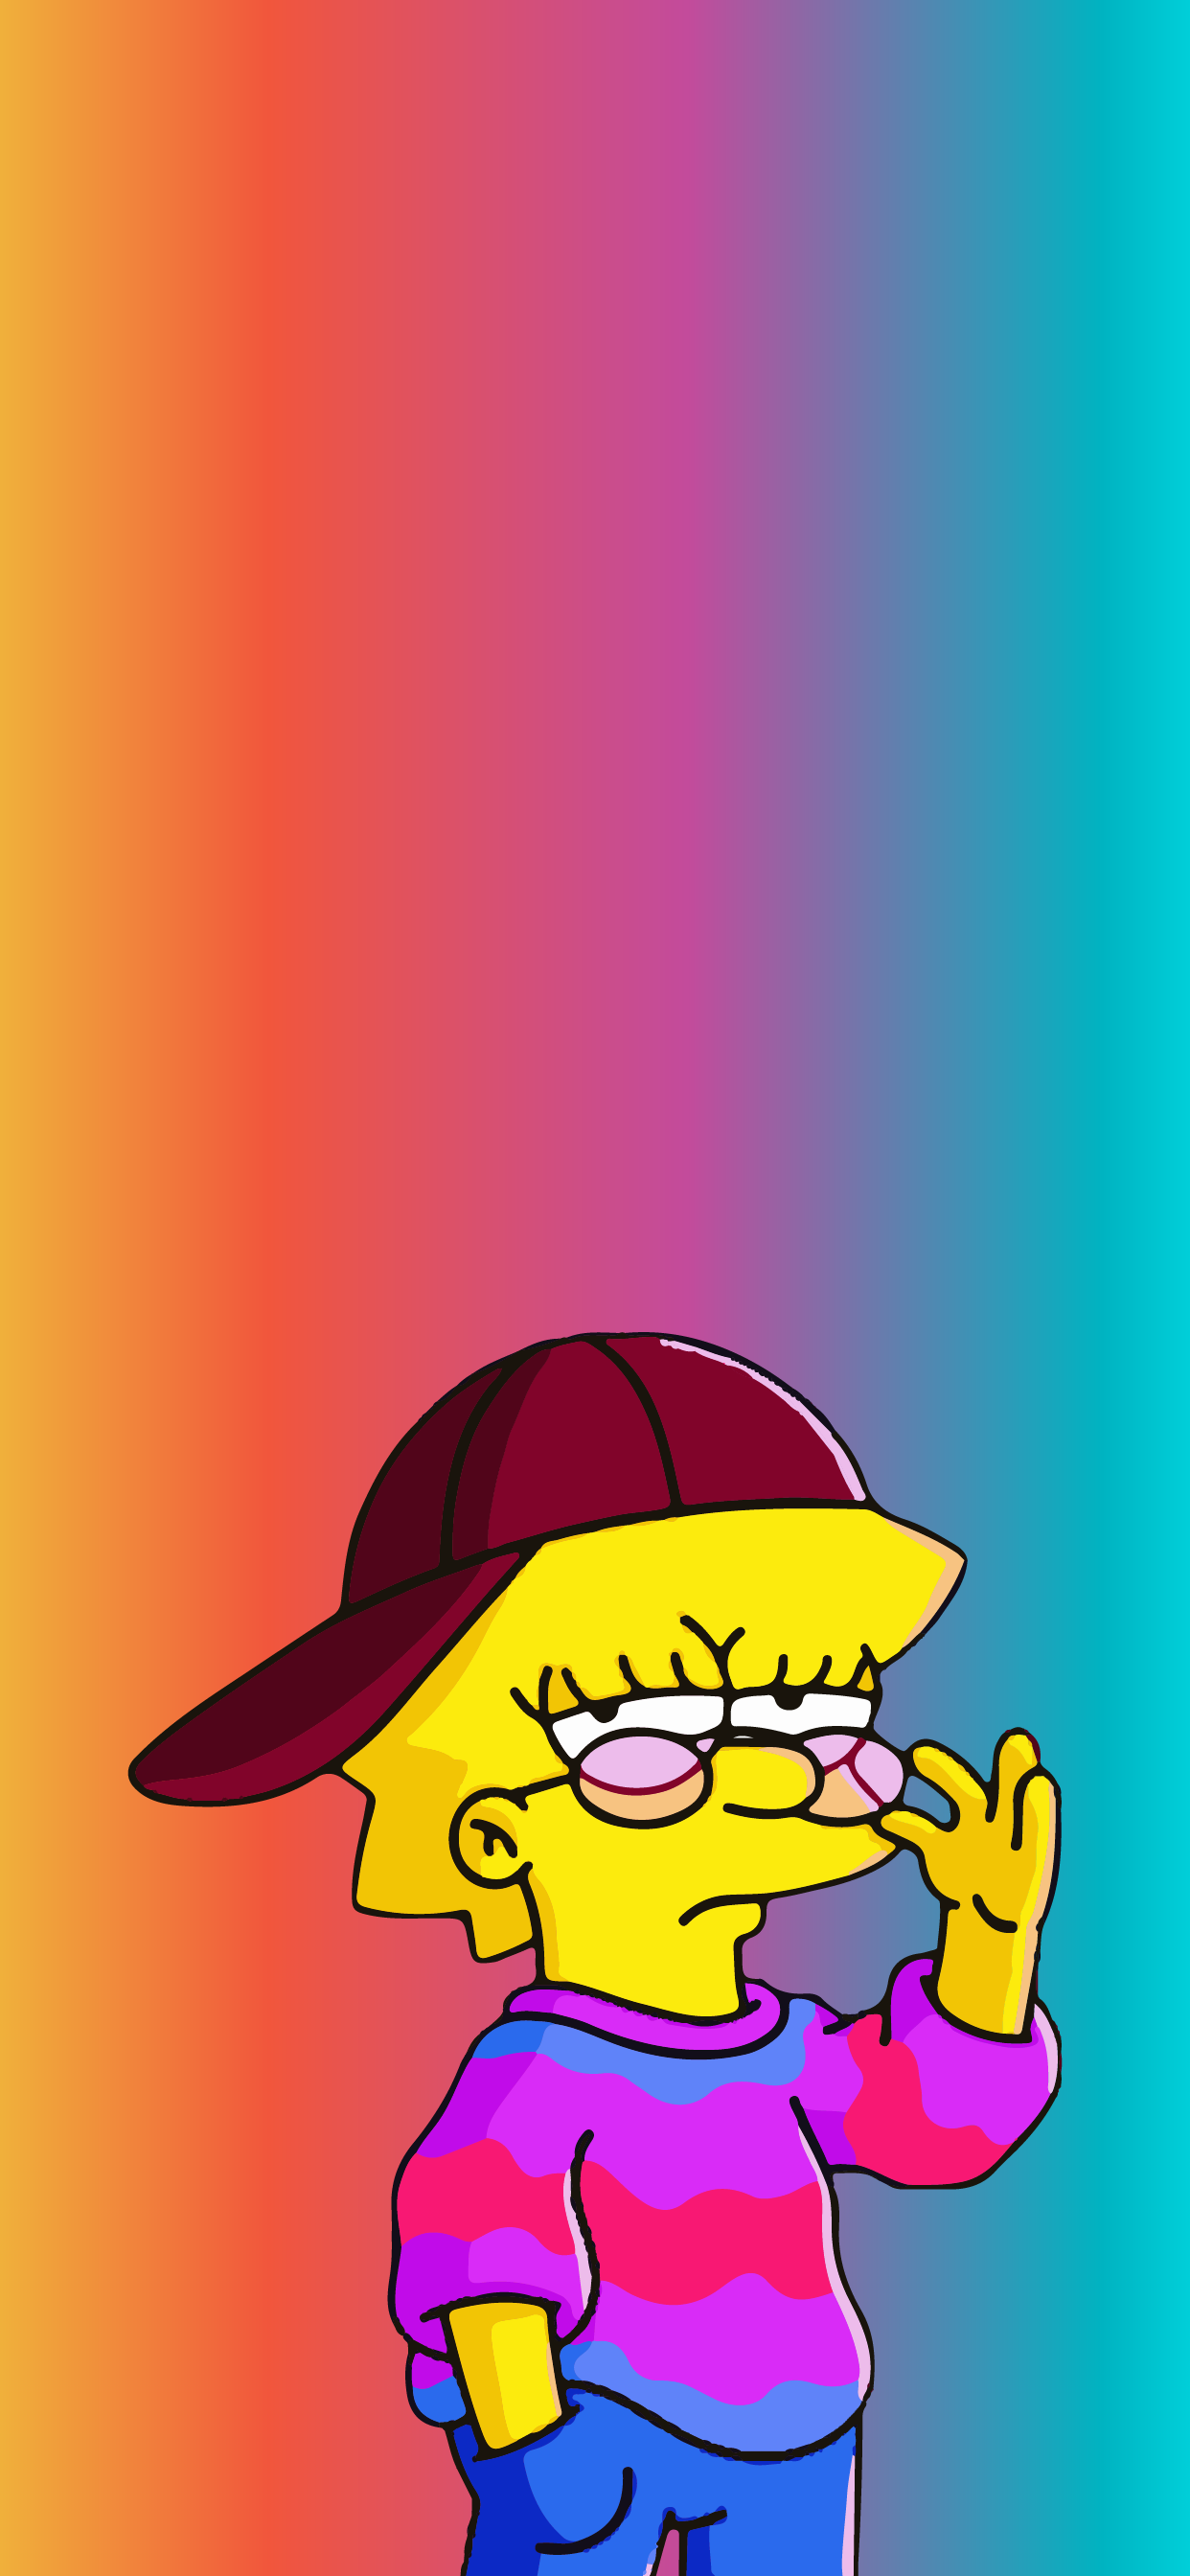 Download Wallpaper Aesthetic Cartoon Characters - Lisa Simpson